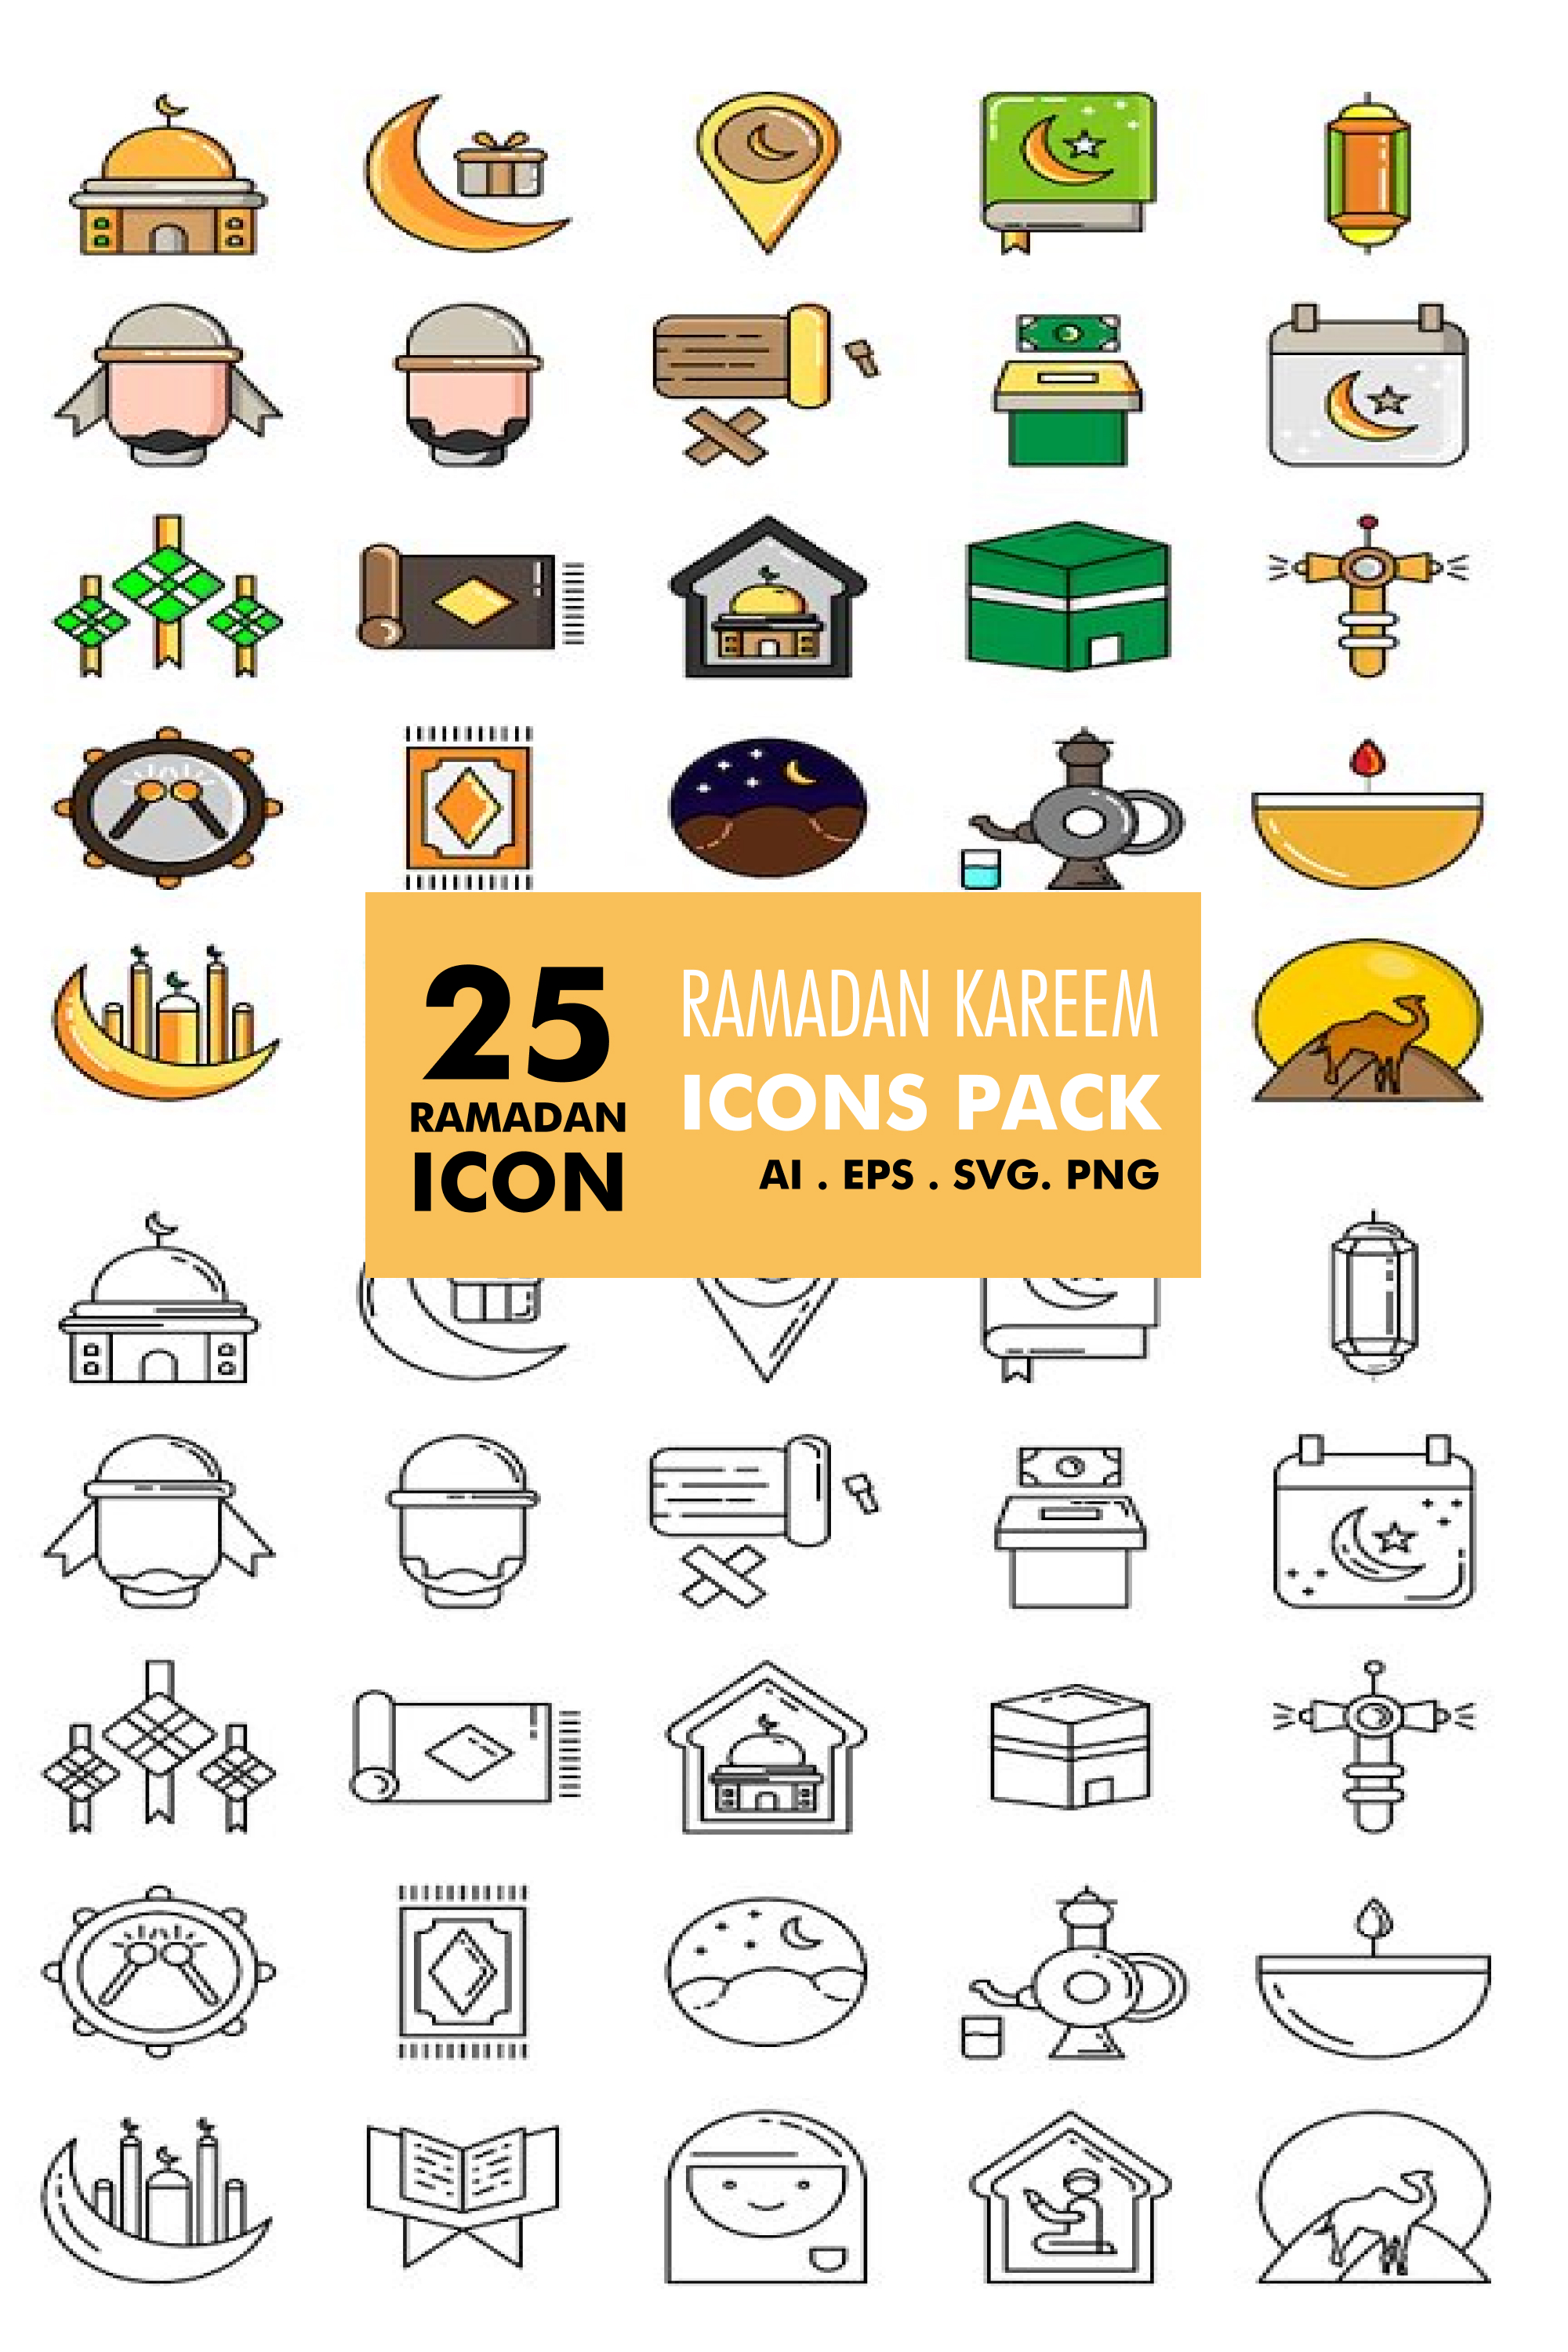 Ramadan kareem icons pack of pinterest.